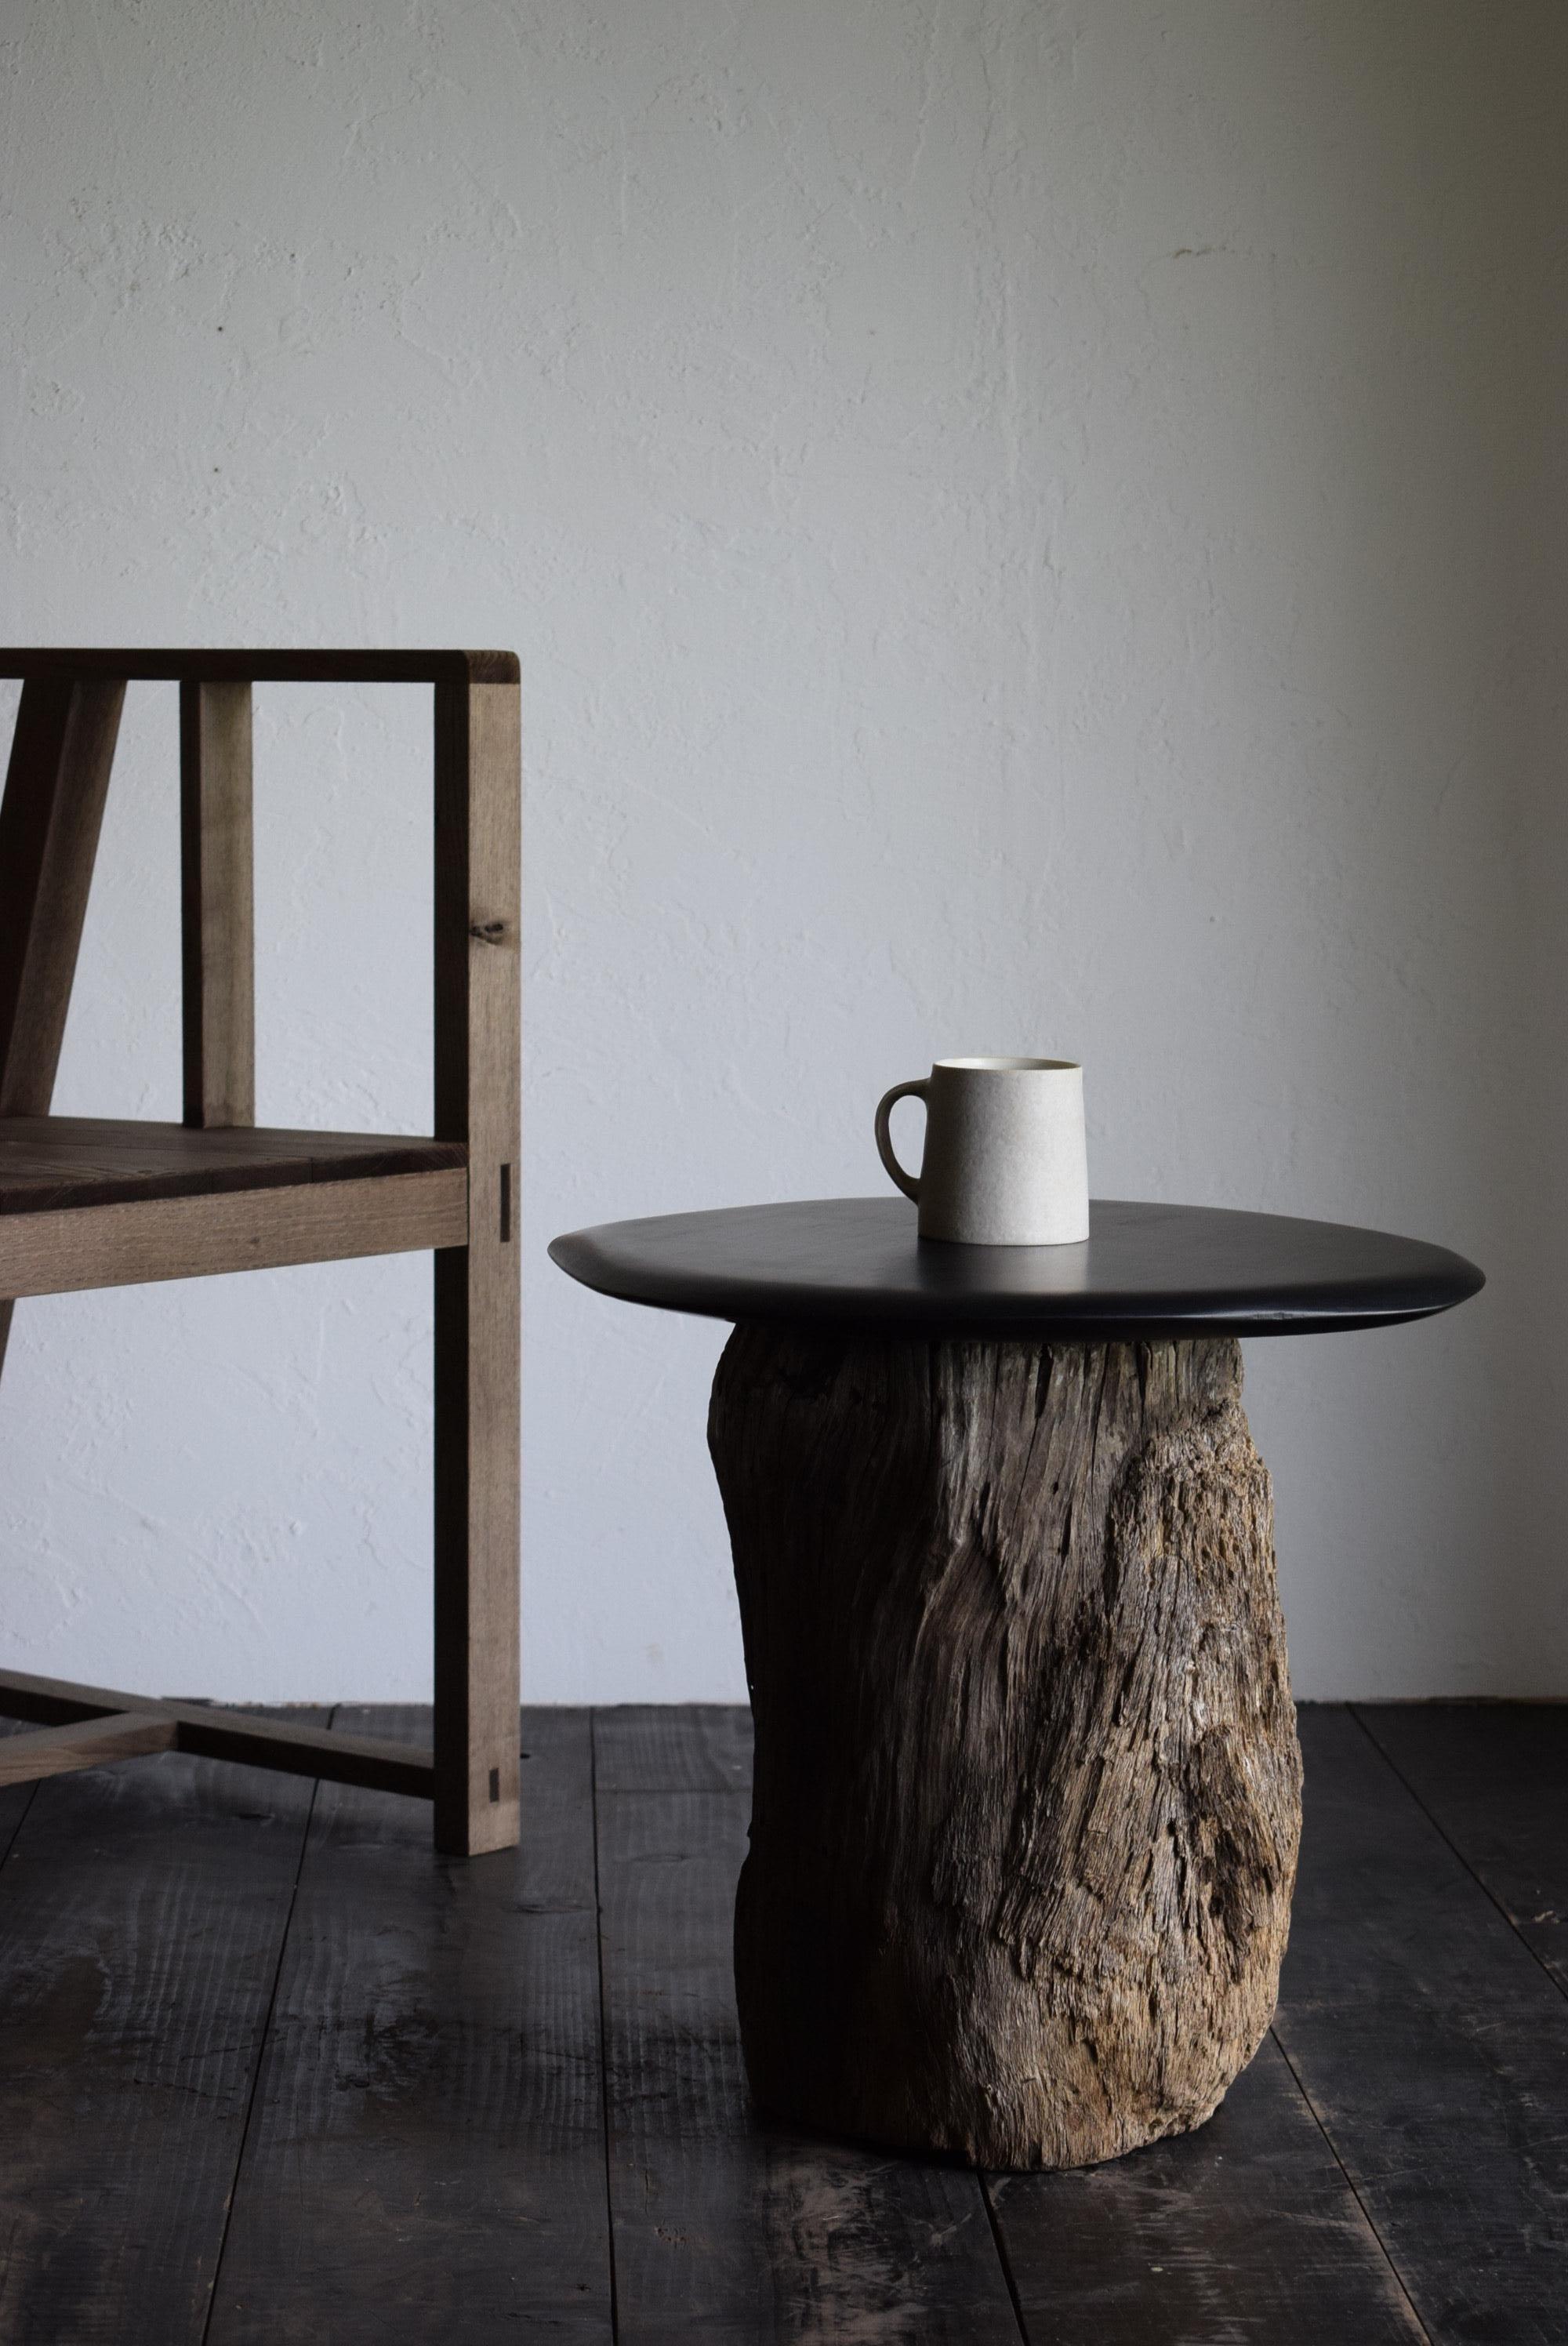 Primitive Japanese primitive coffee table / wabi-sabi side table / Flower stand / stool